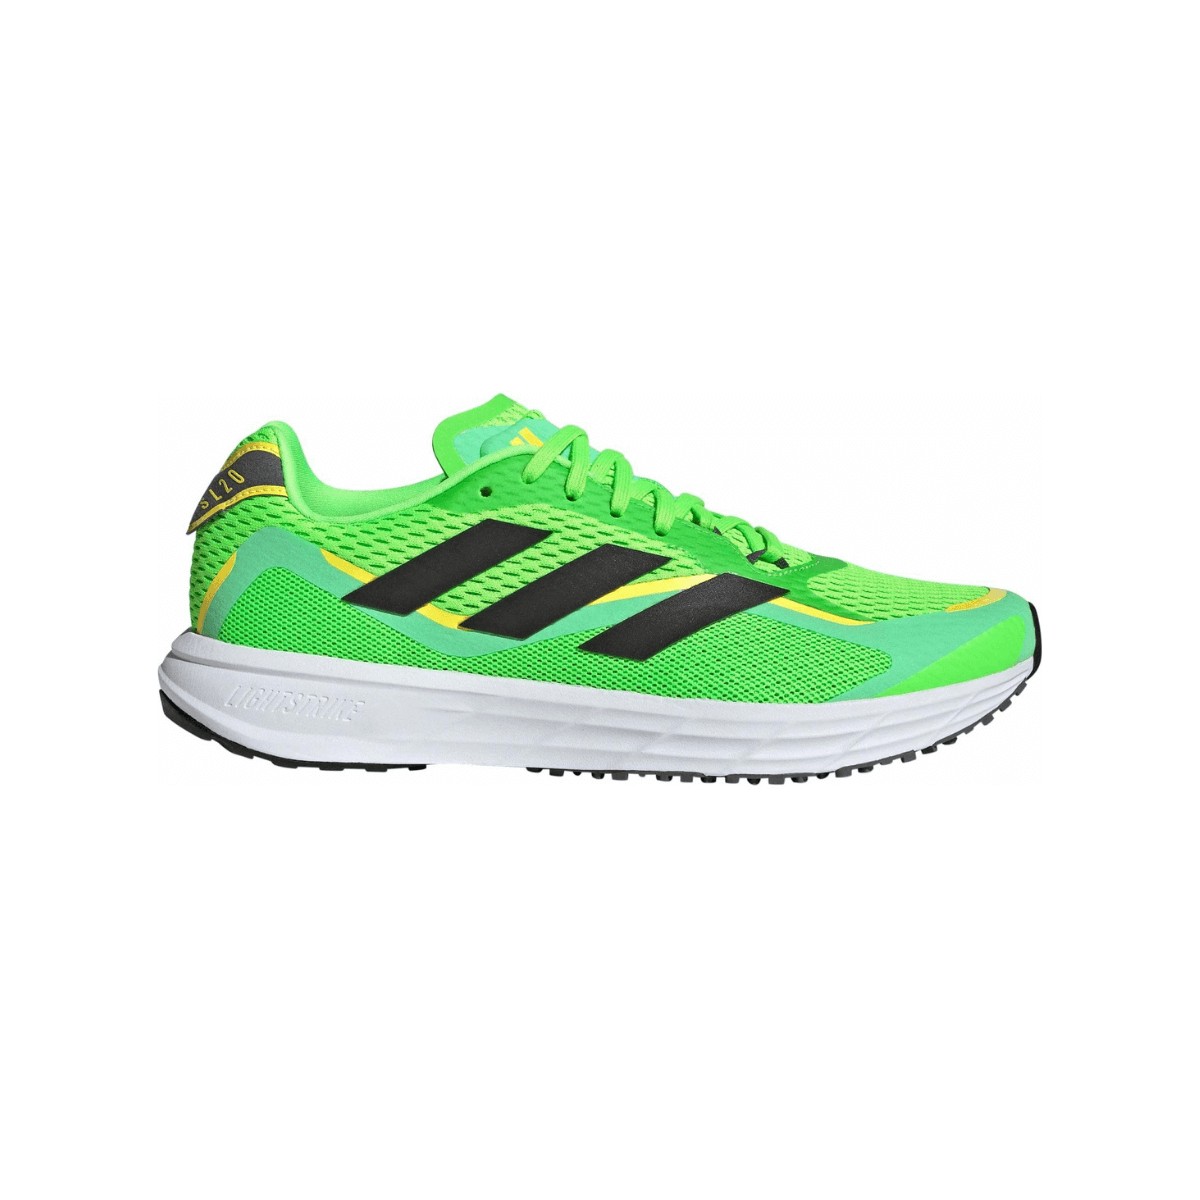 Adidas SL20.3 Shoes Green Black SS22, Size UK 9